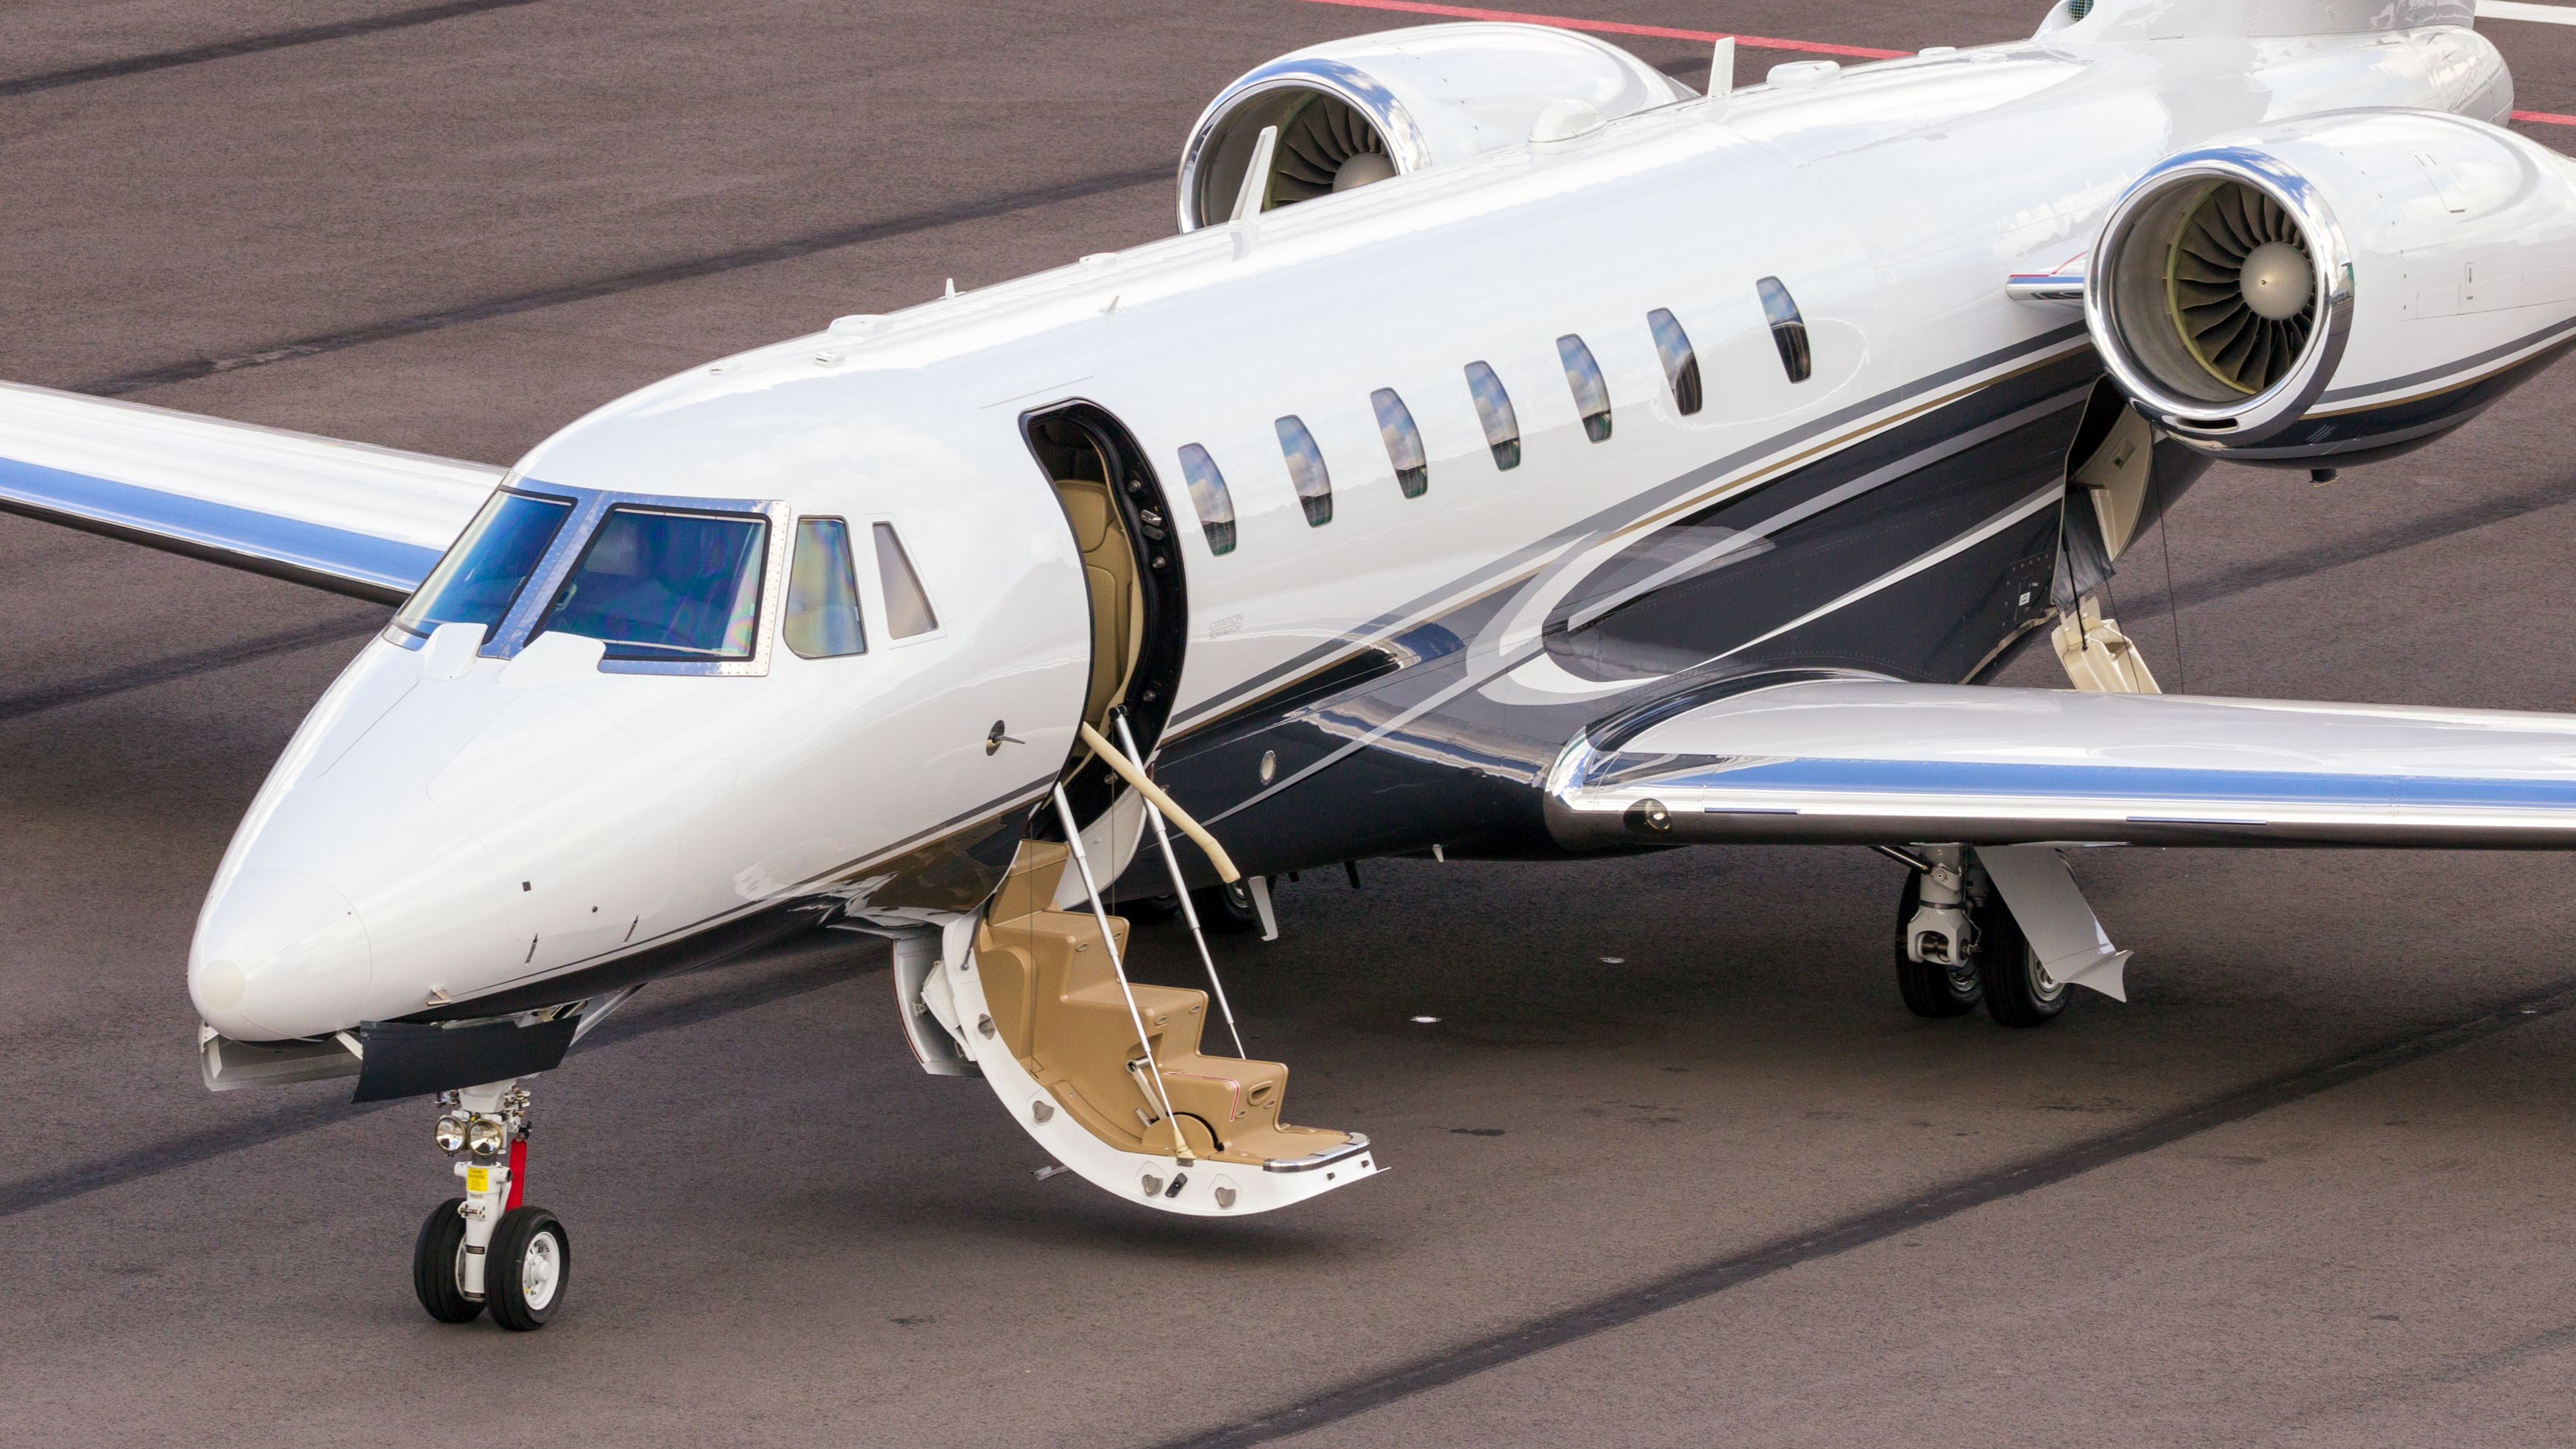 A Cessna 680 Citation Sovereign business jet parked at an airport.